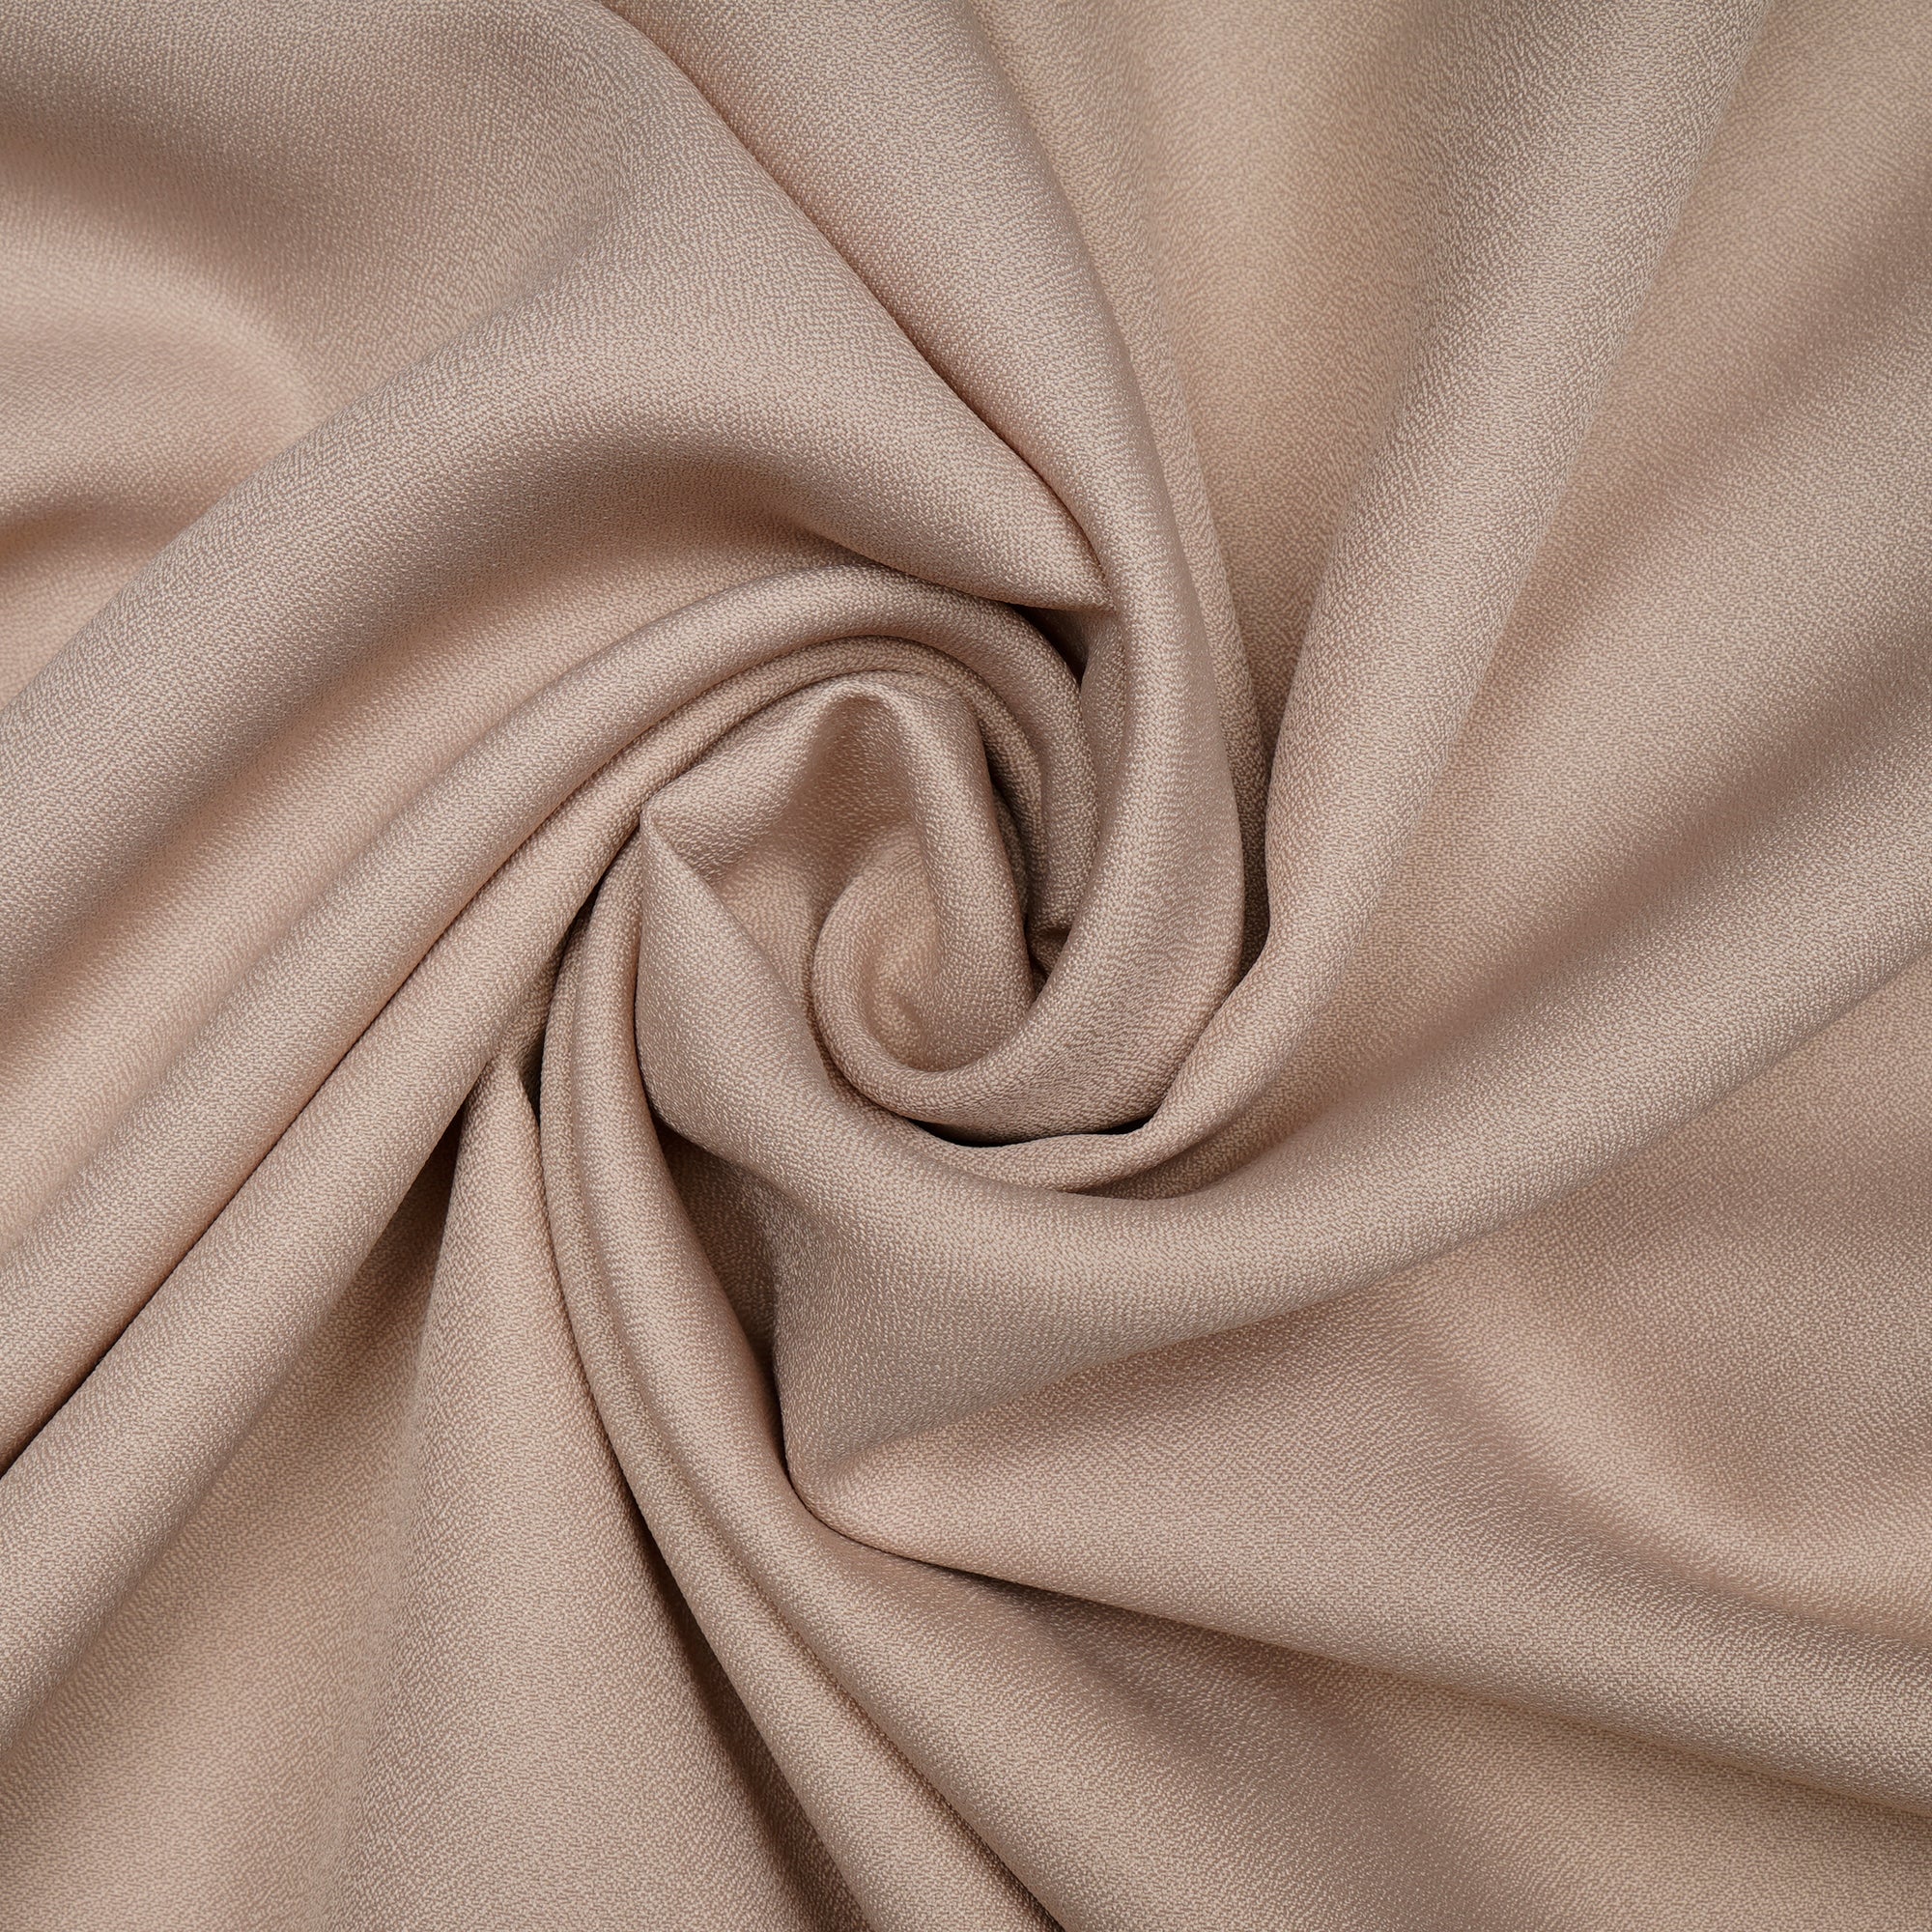 Irish Cream Solid Dyed Imported Amazon Moss Crepe Fabric (60" Width)